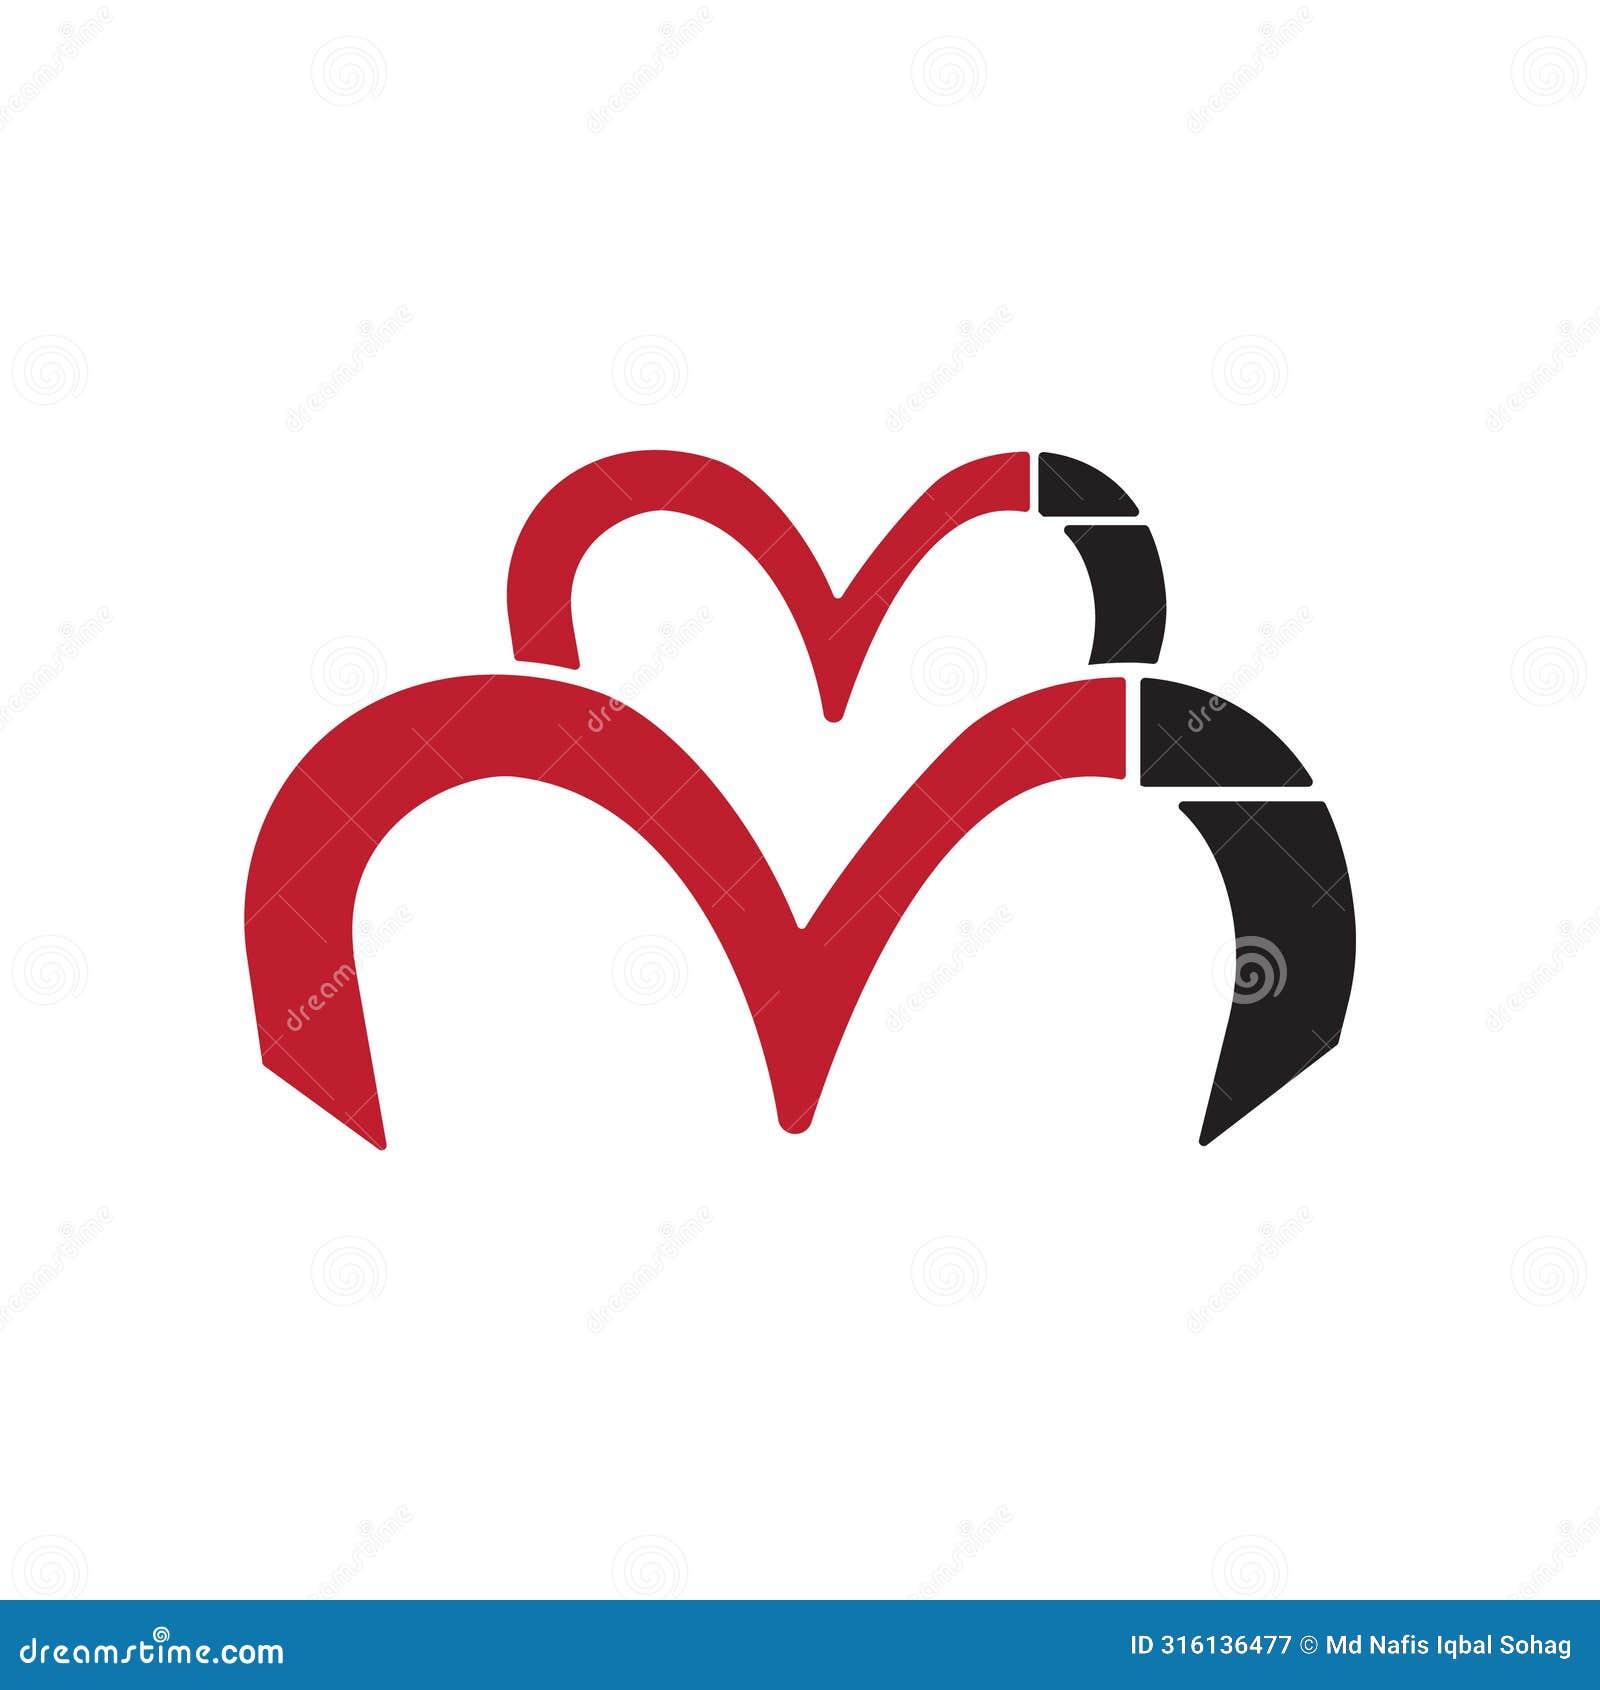 m crown logo . m logo black and red color icon . mi logo  images. luxury mi crown logo .